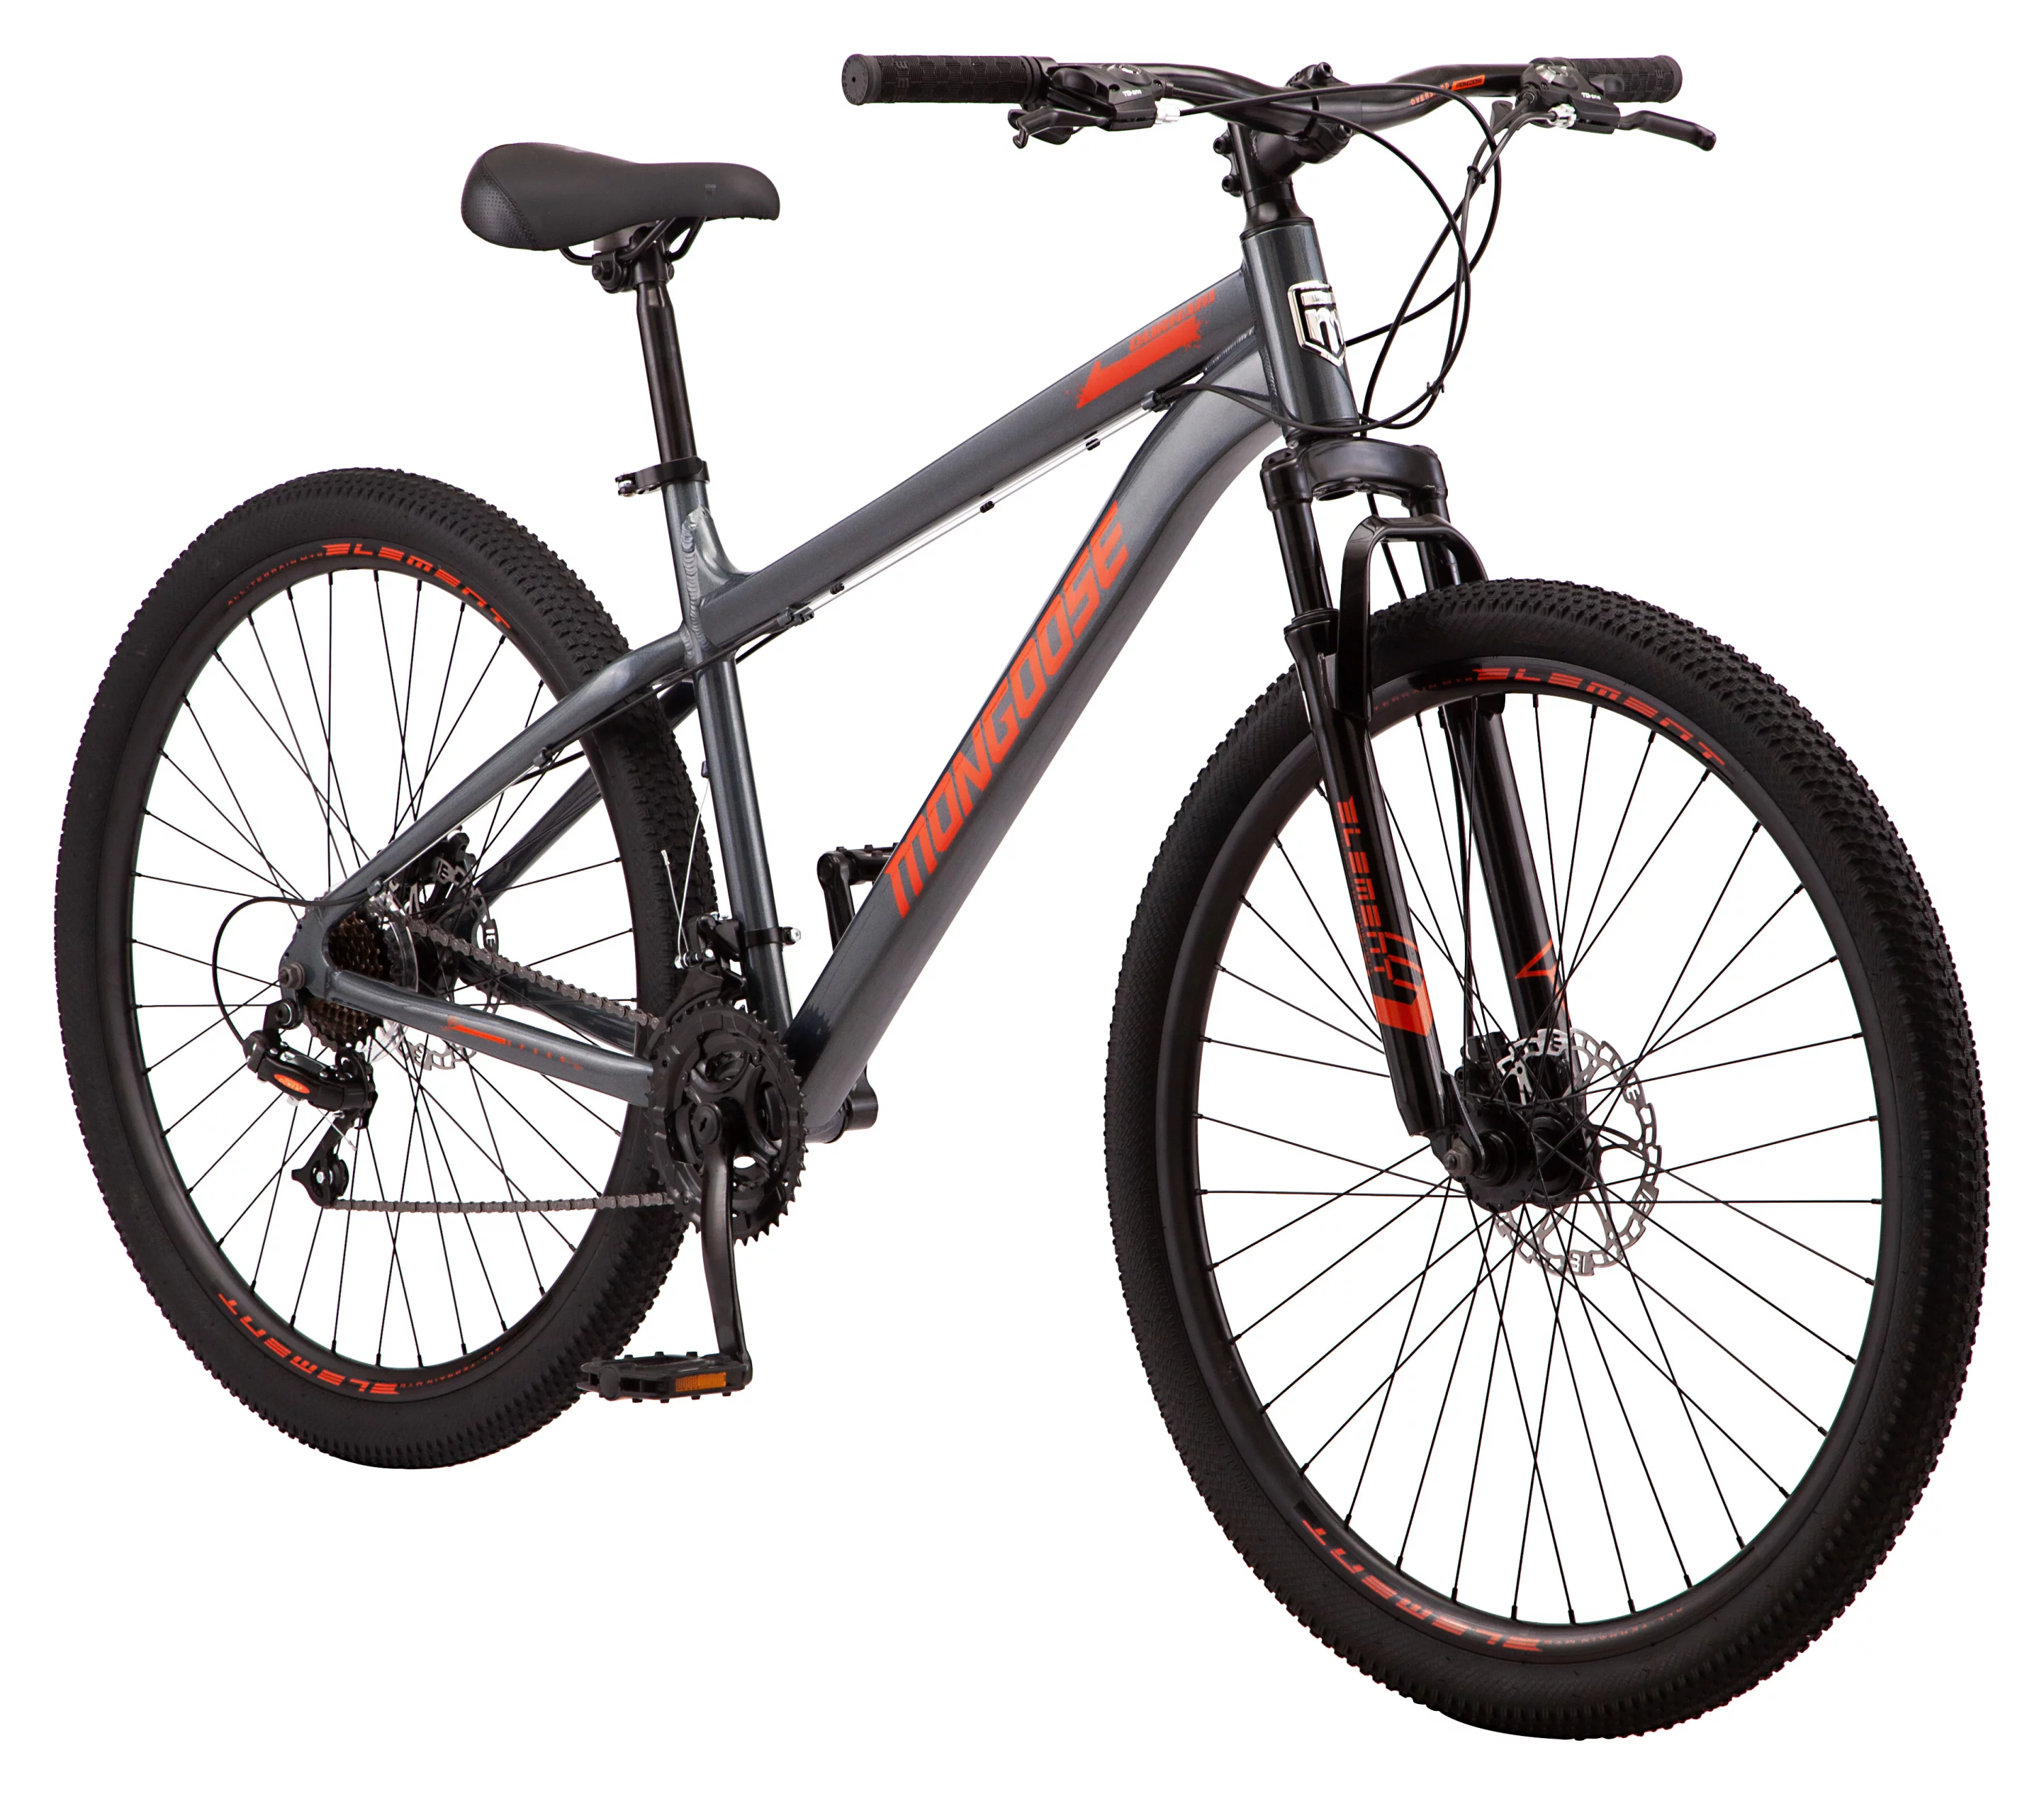 Mongoose Durham Mountain Bike, 29-Inch Wheel, 21 Speeds, Grey